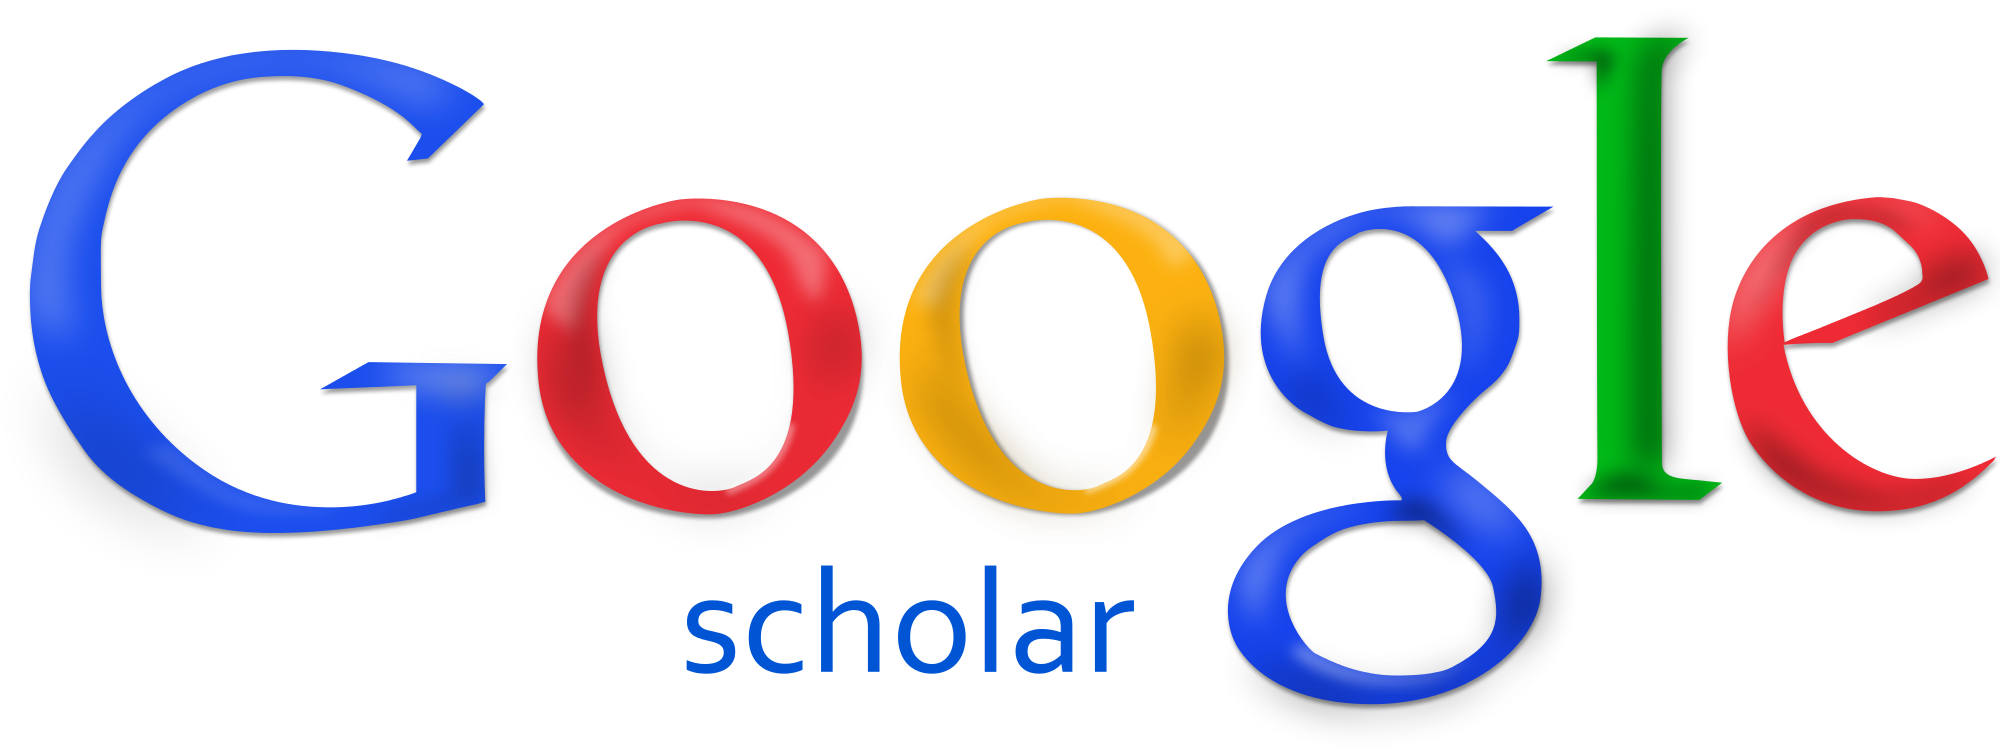 Google-Scholar12.png